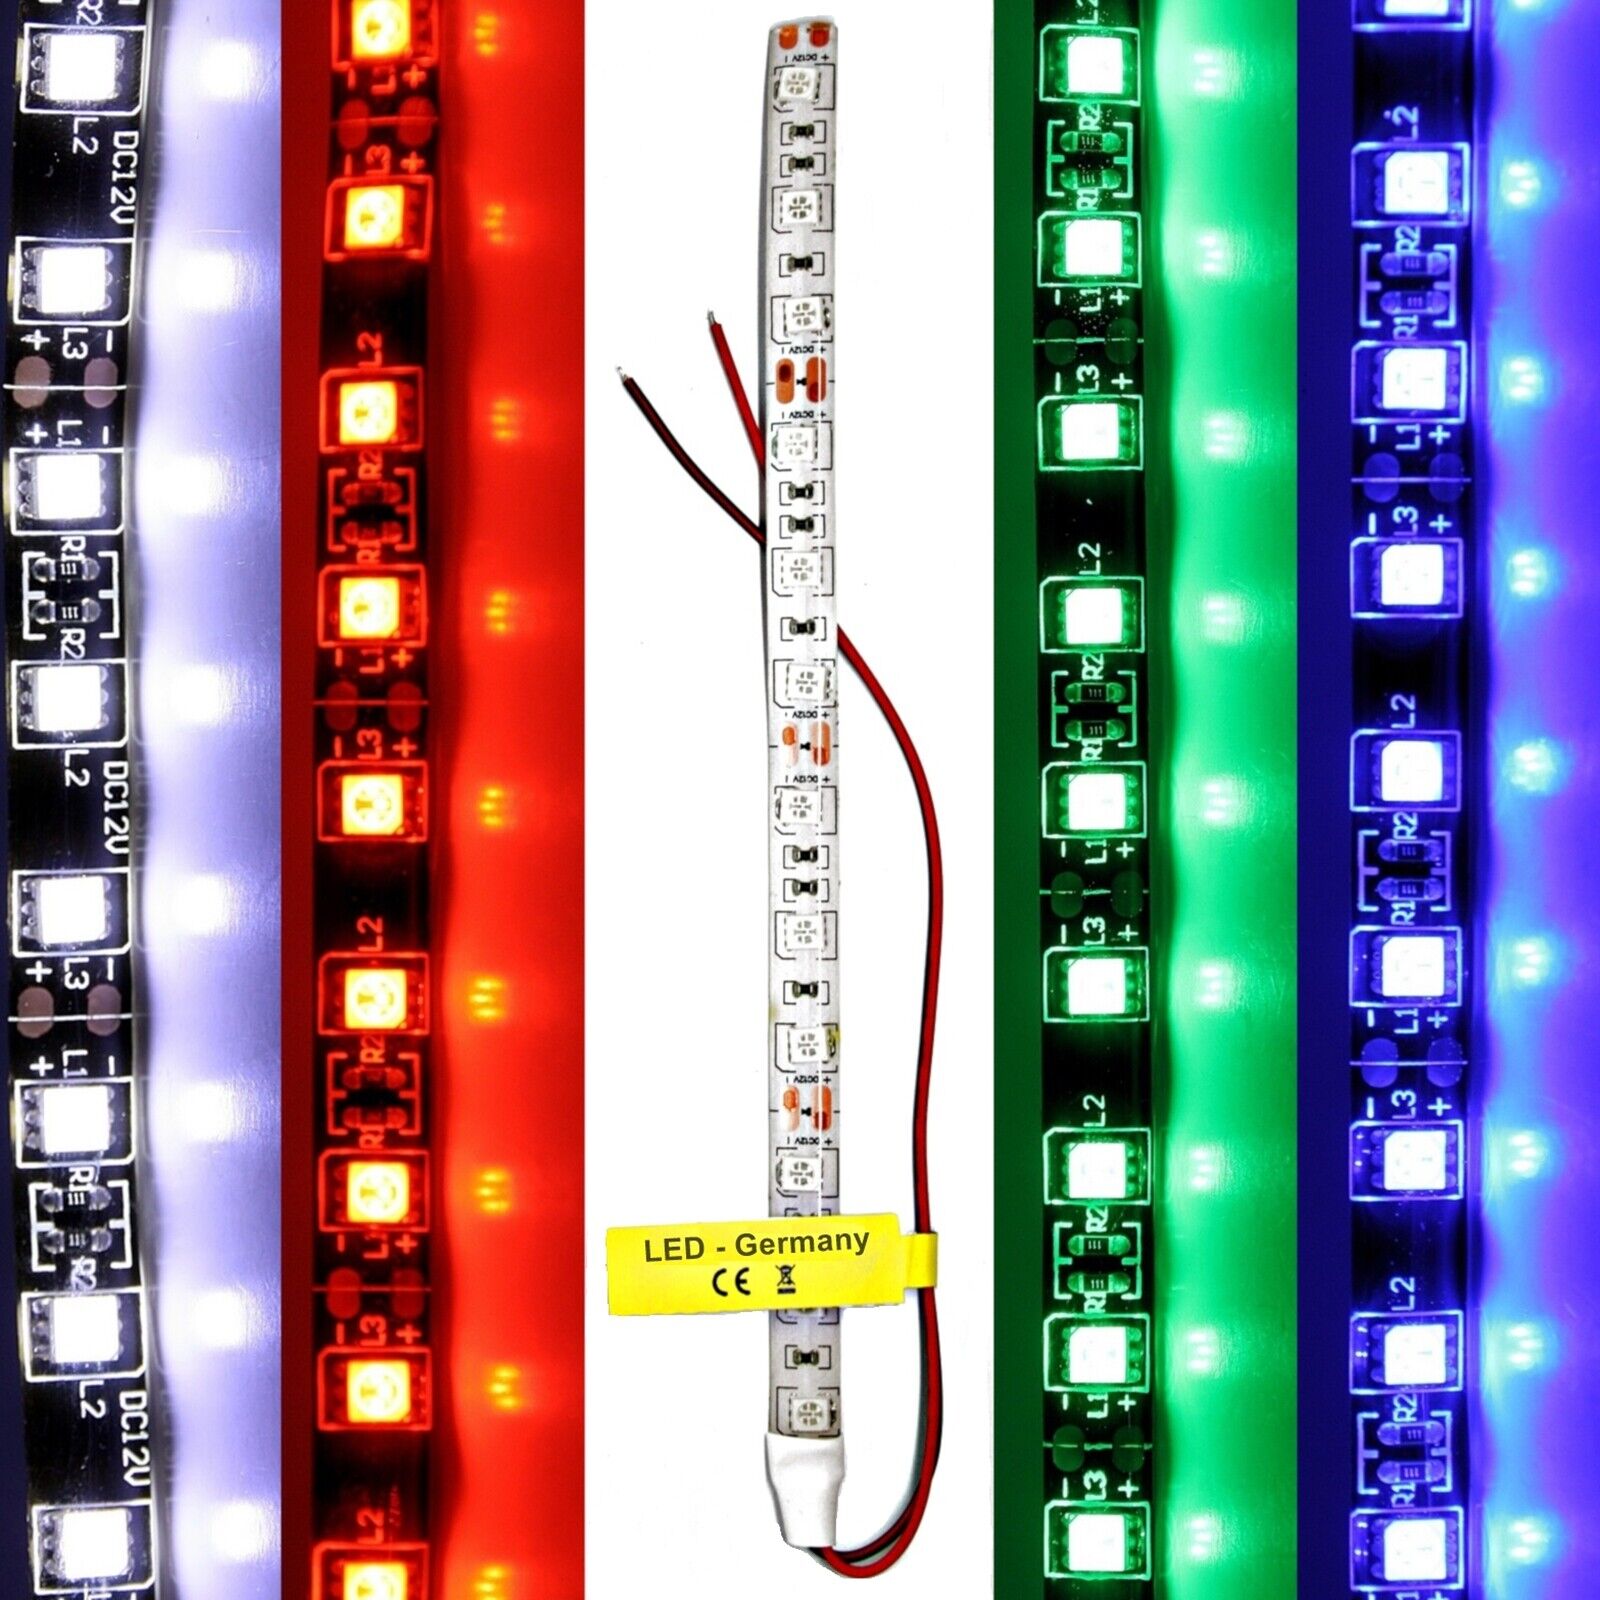 10cm - 5m LED Stripe 12 / 24 Volt - Cable Lighting 3M White Blue Red €9.99/m